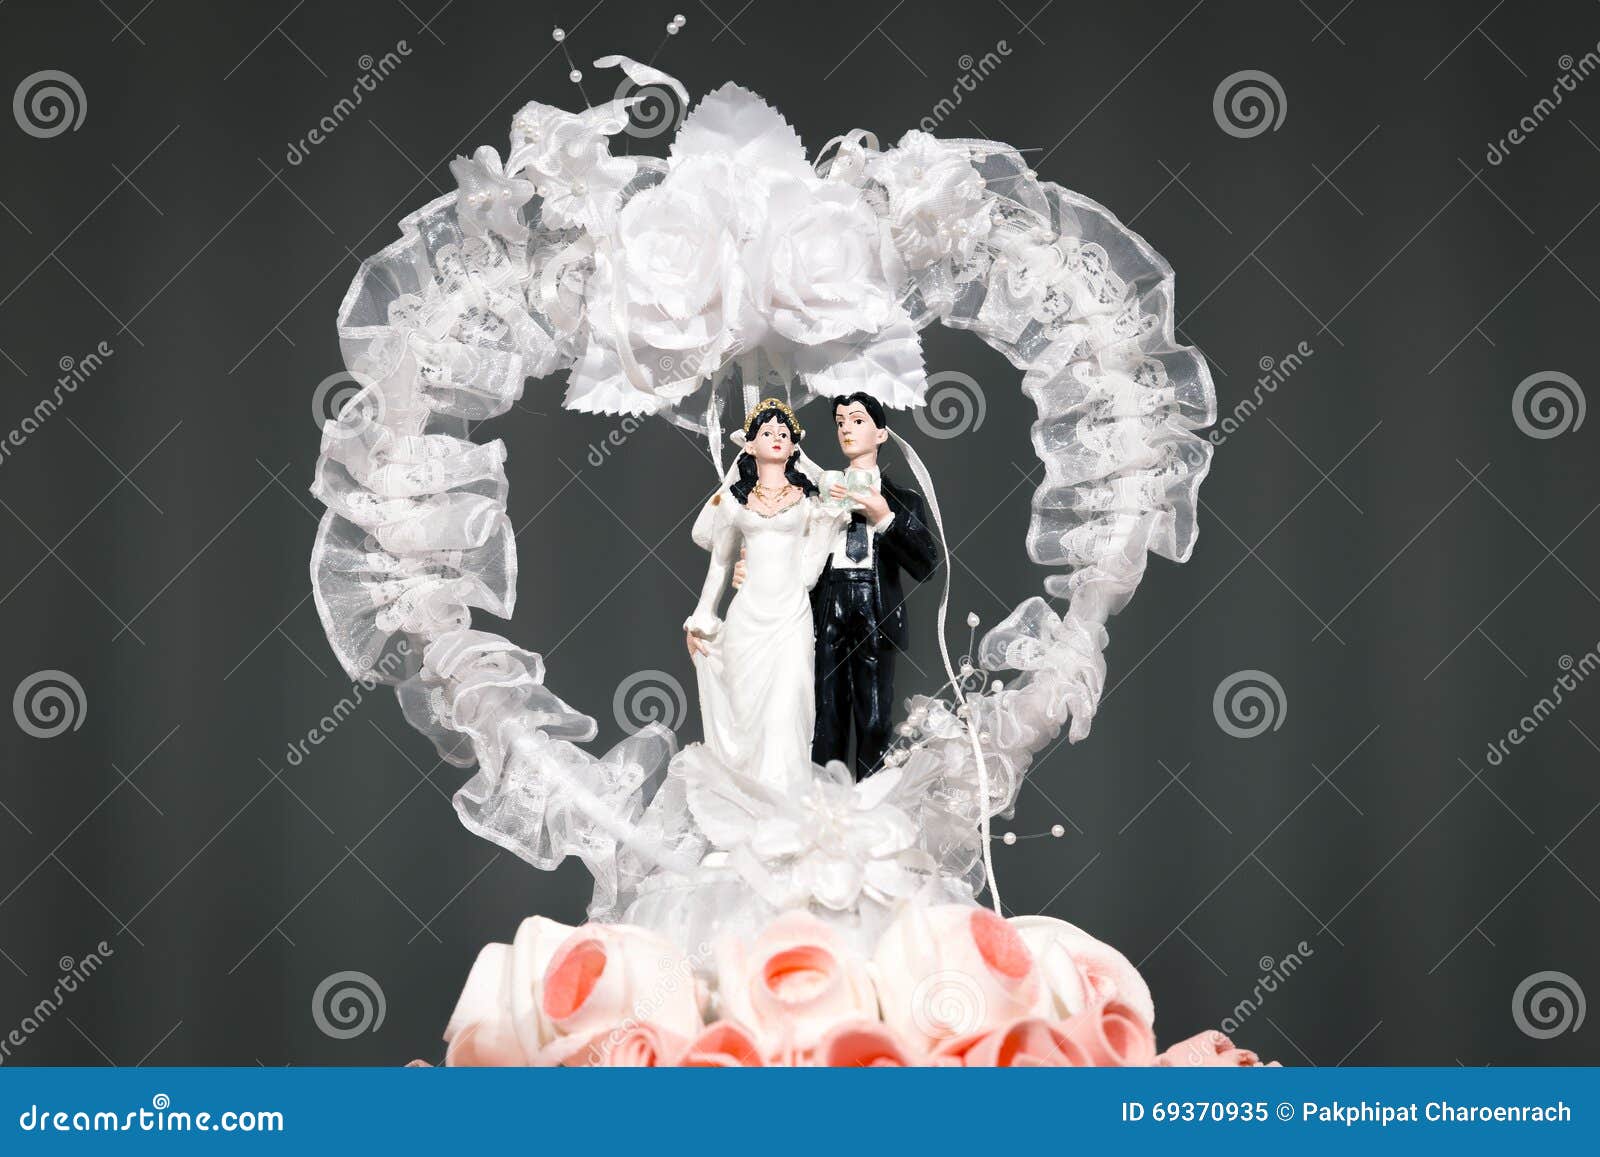 Bride And Groom Couple Doll On Wedding Cake Stock Image Image